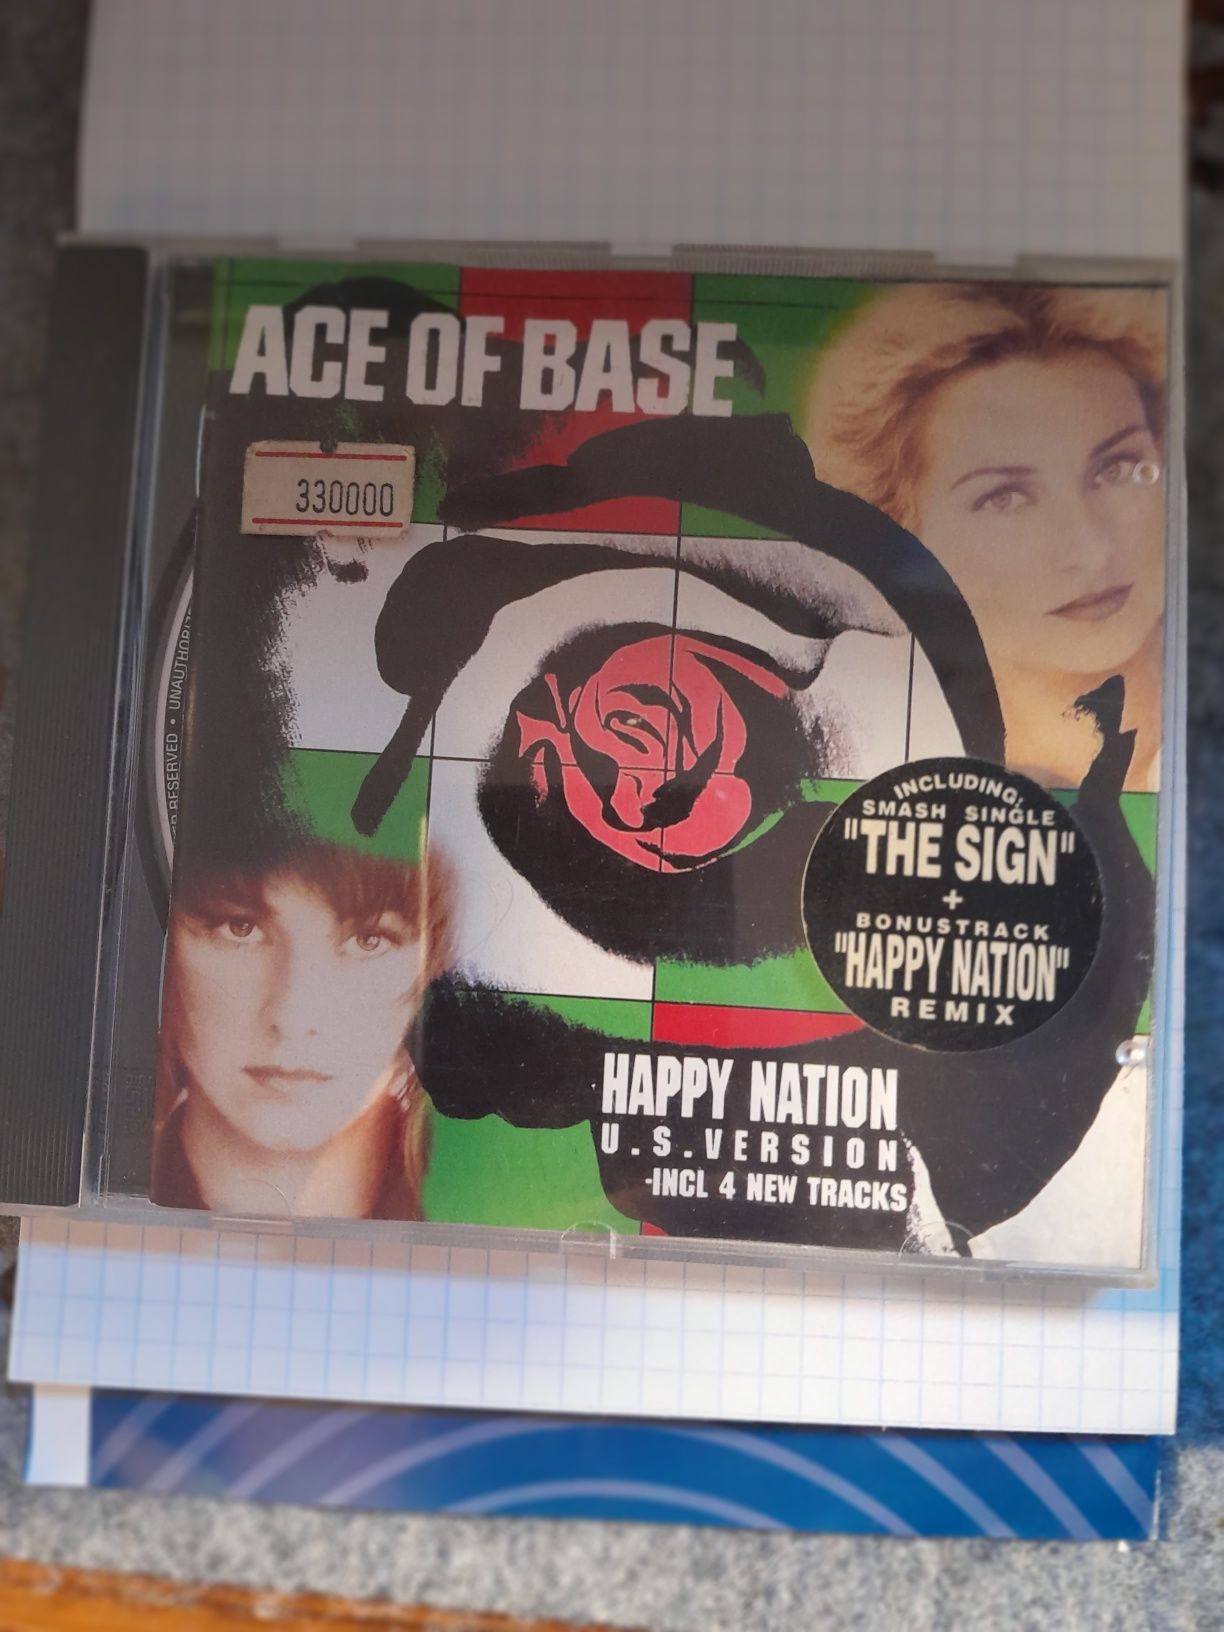 Ace of Base - Happy Nation U.S.